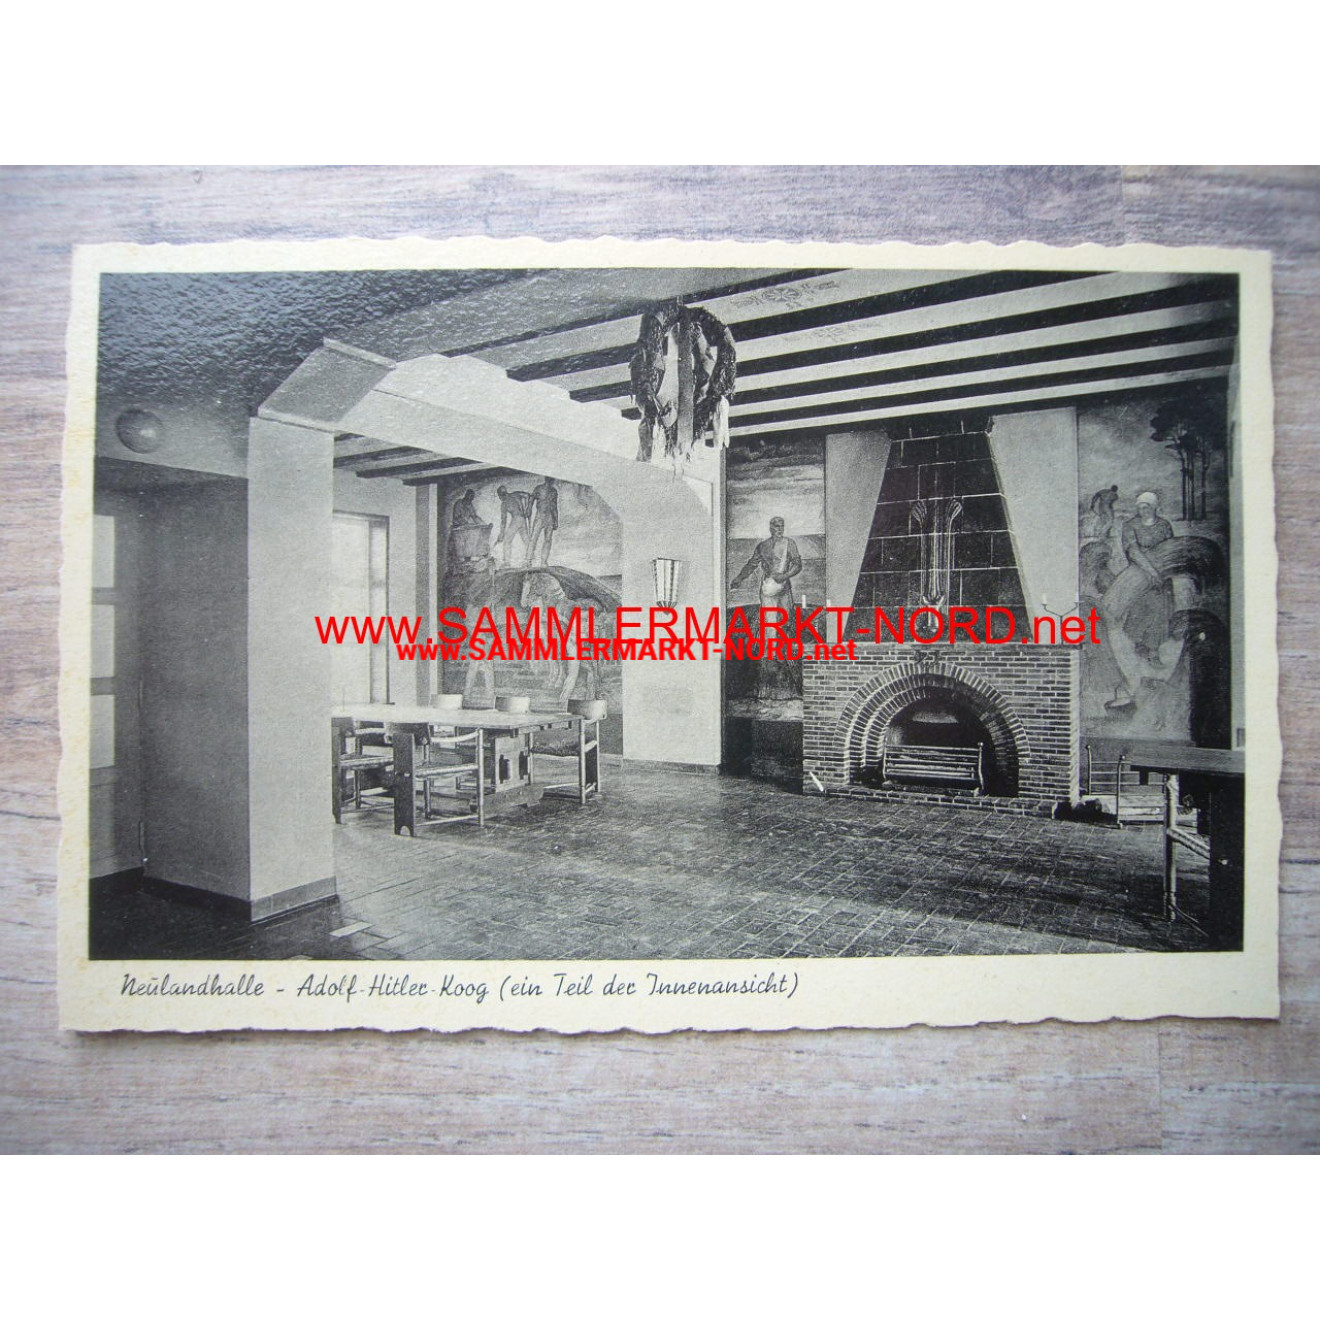 Neulandhalle - Adolf Hitler Koog - postcard